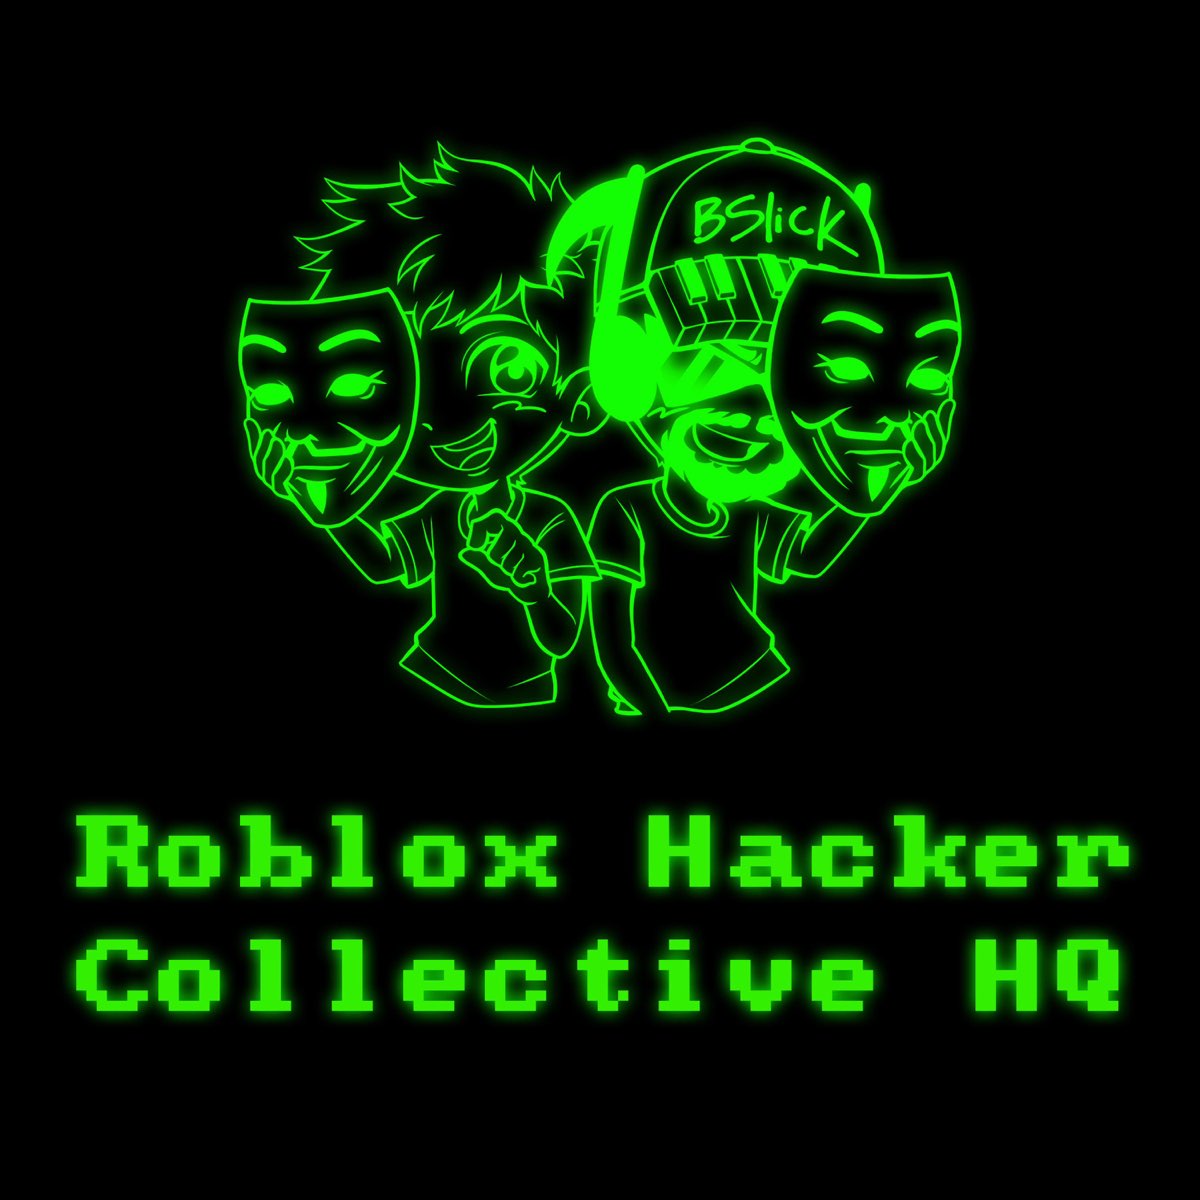 Roblox Hacker (feat. TimmehIRL & MiniToon) - Single - Album by Bslick -  Apple Music